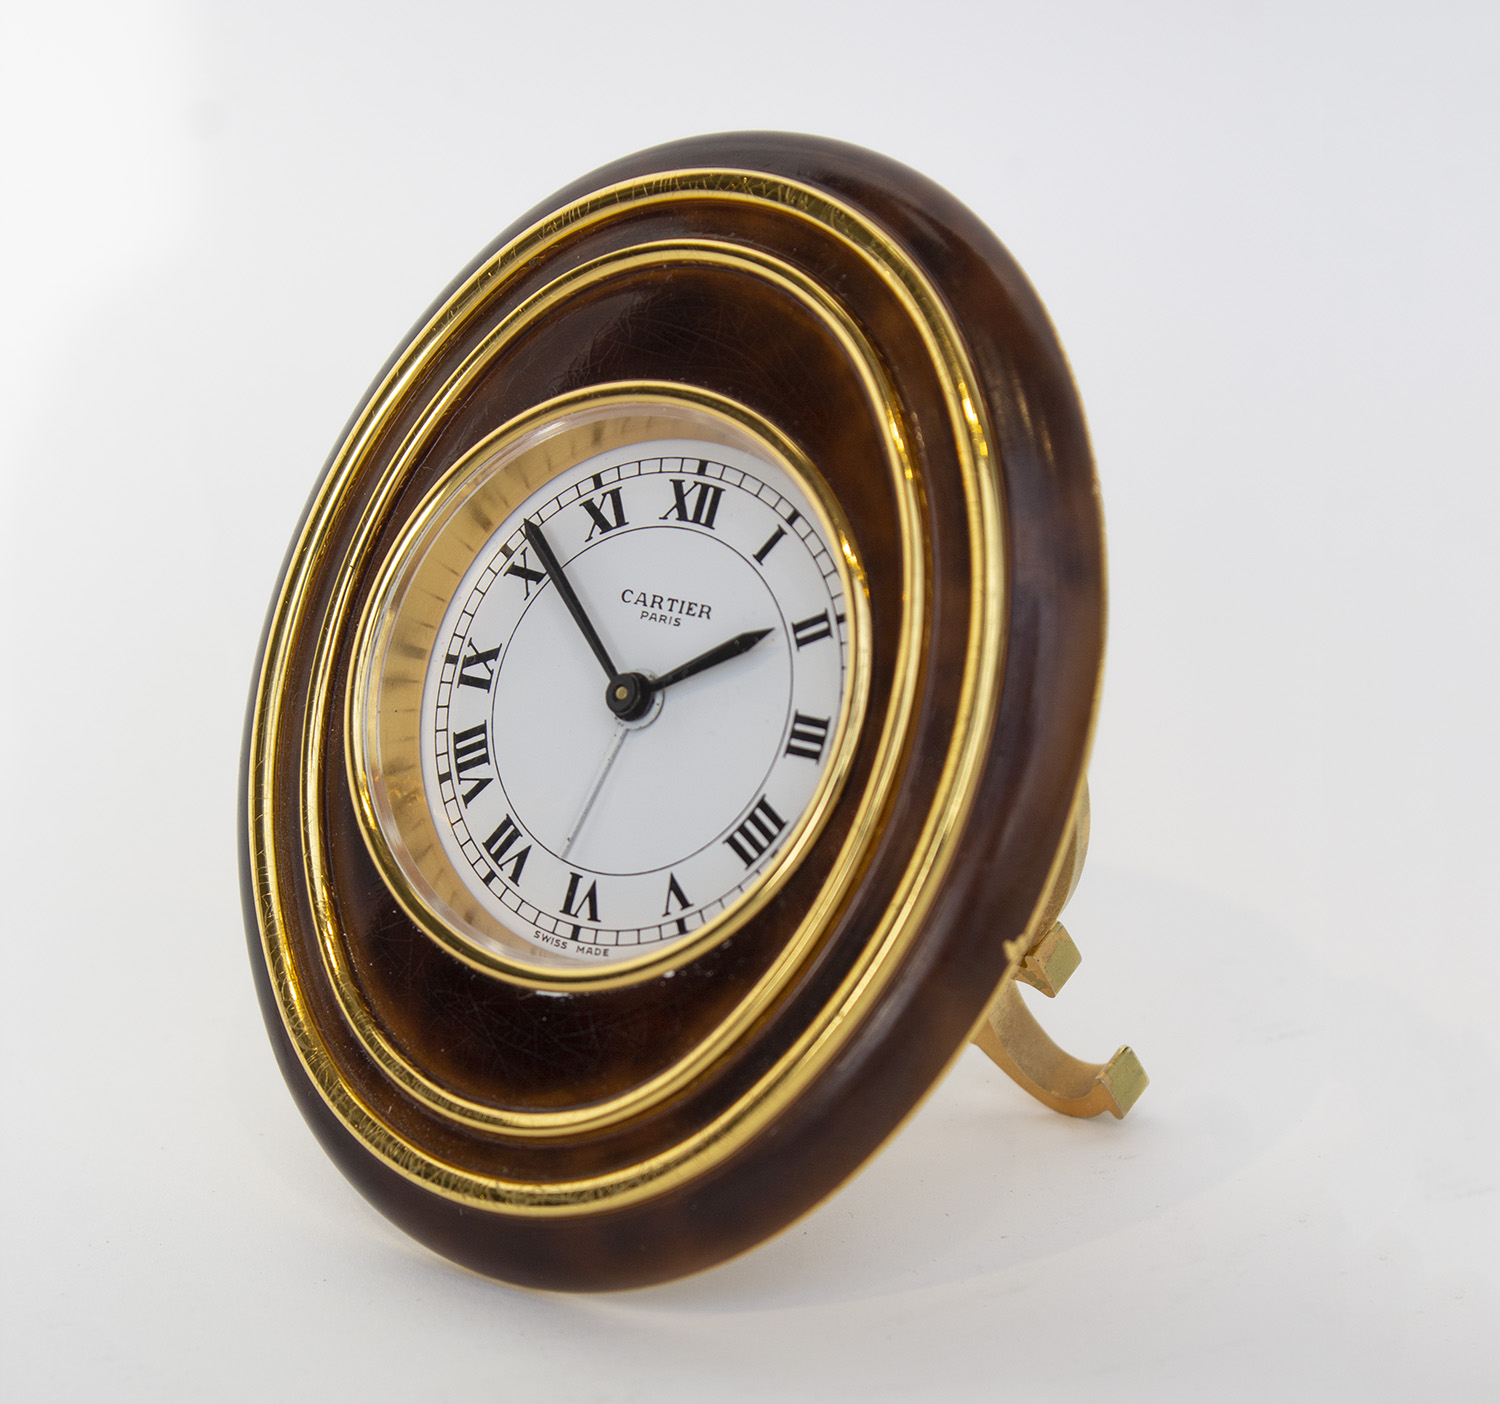 Cartier Alarm Clock, model 7511 